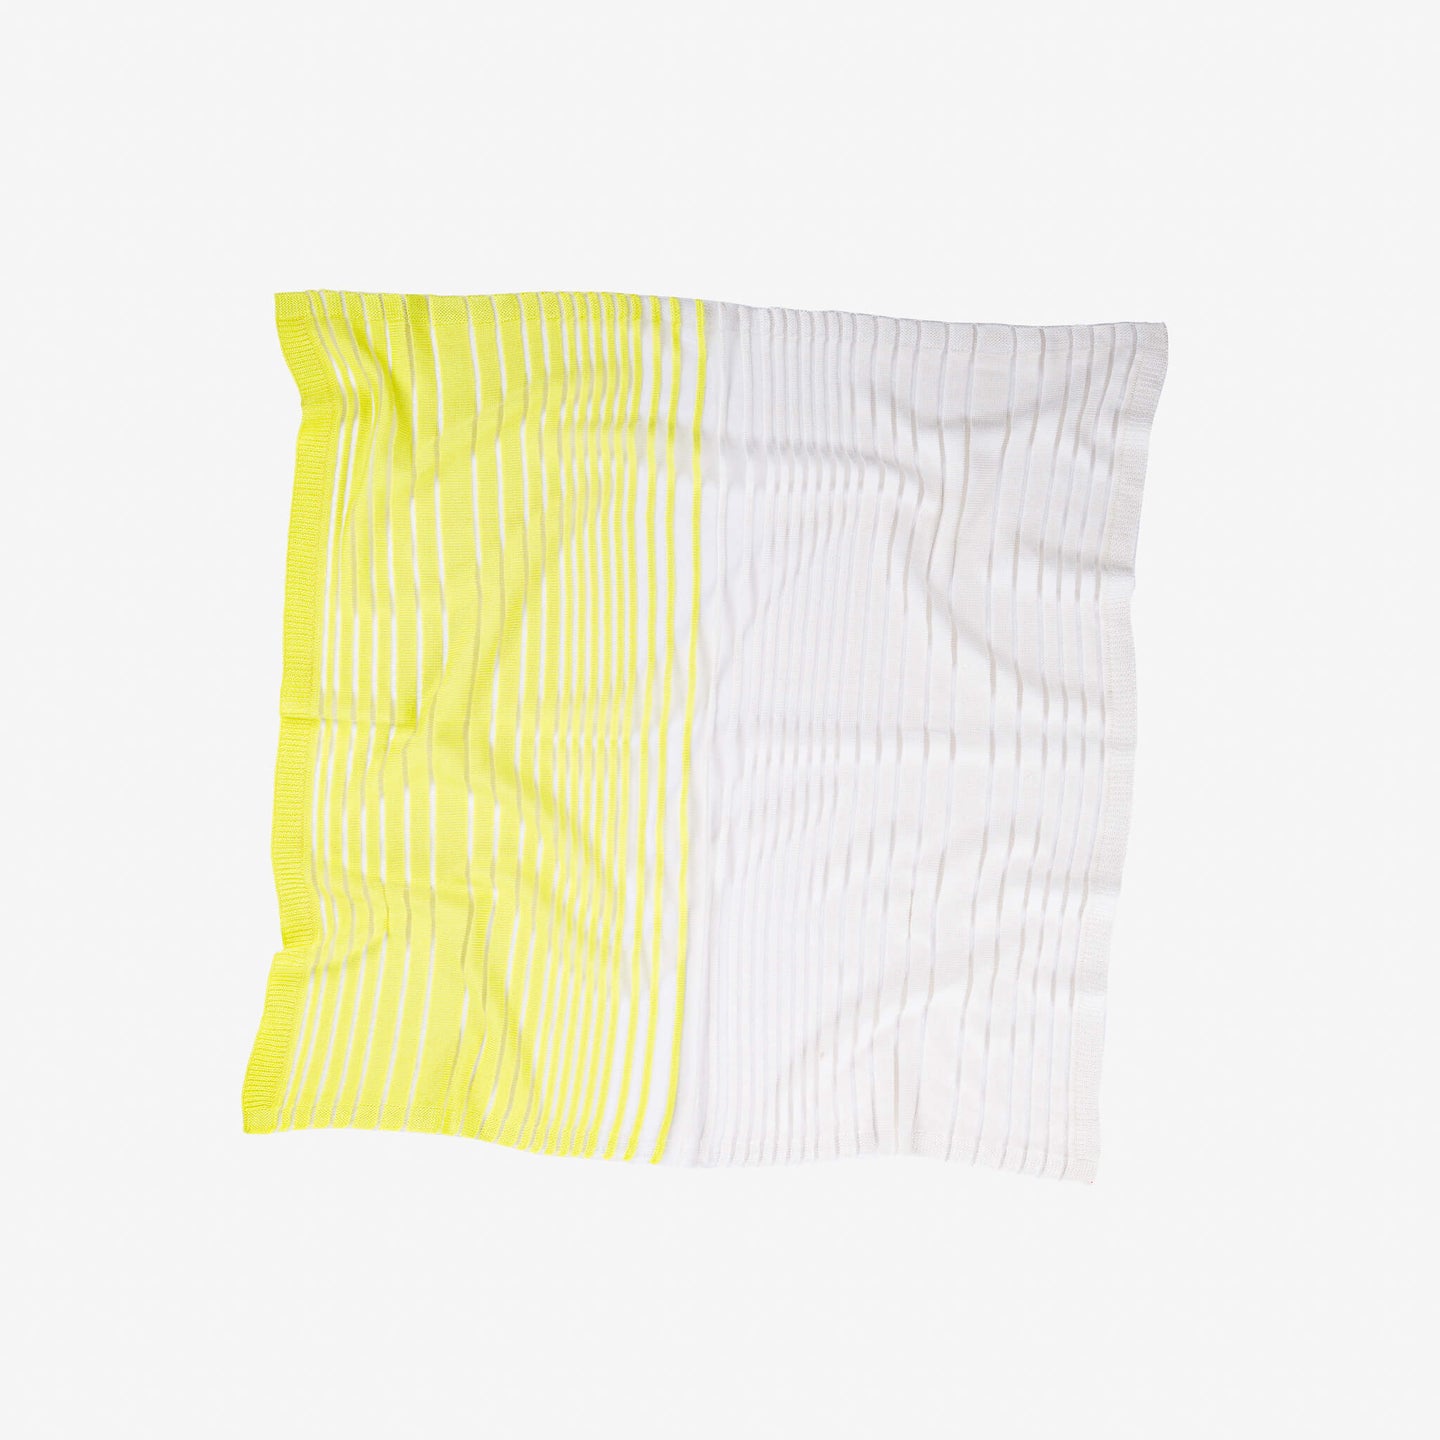 Horizon Bandana Sheer Knit Scarf Stripes